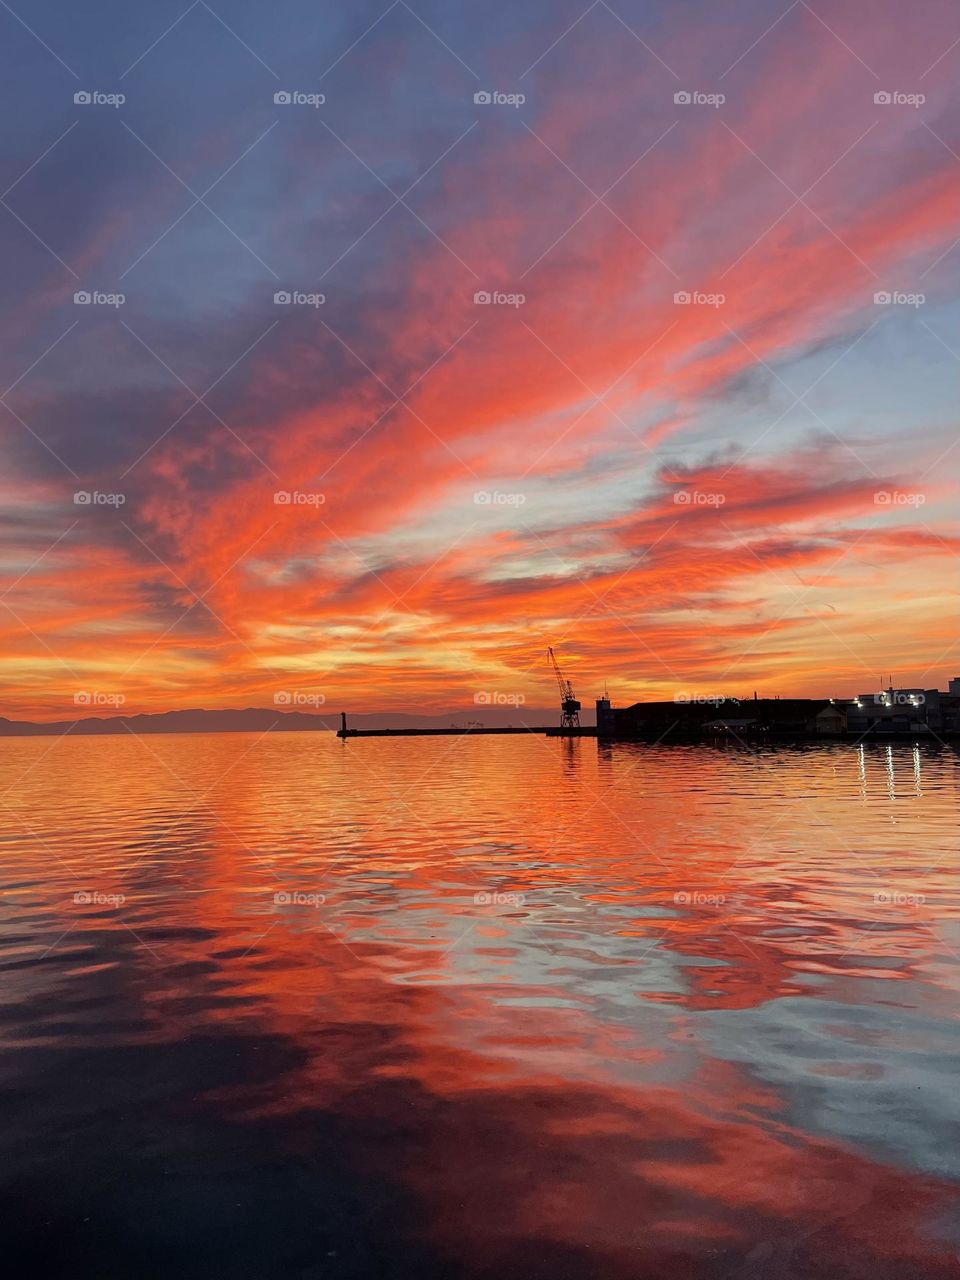 Amazing sunset next to seaport 